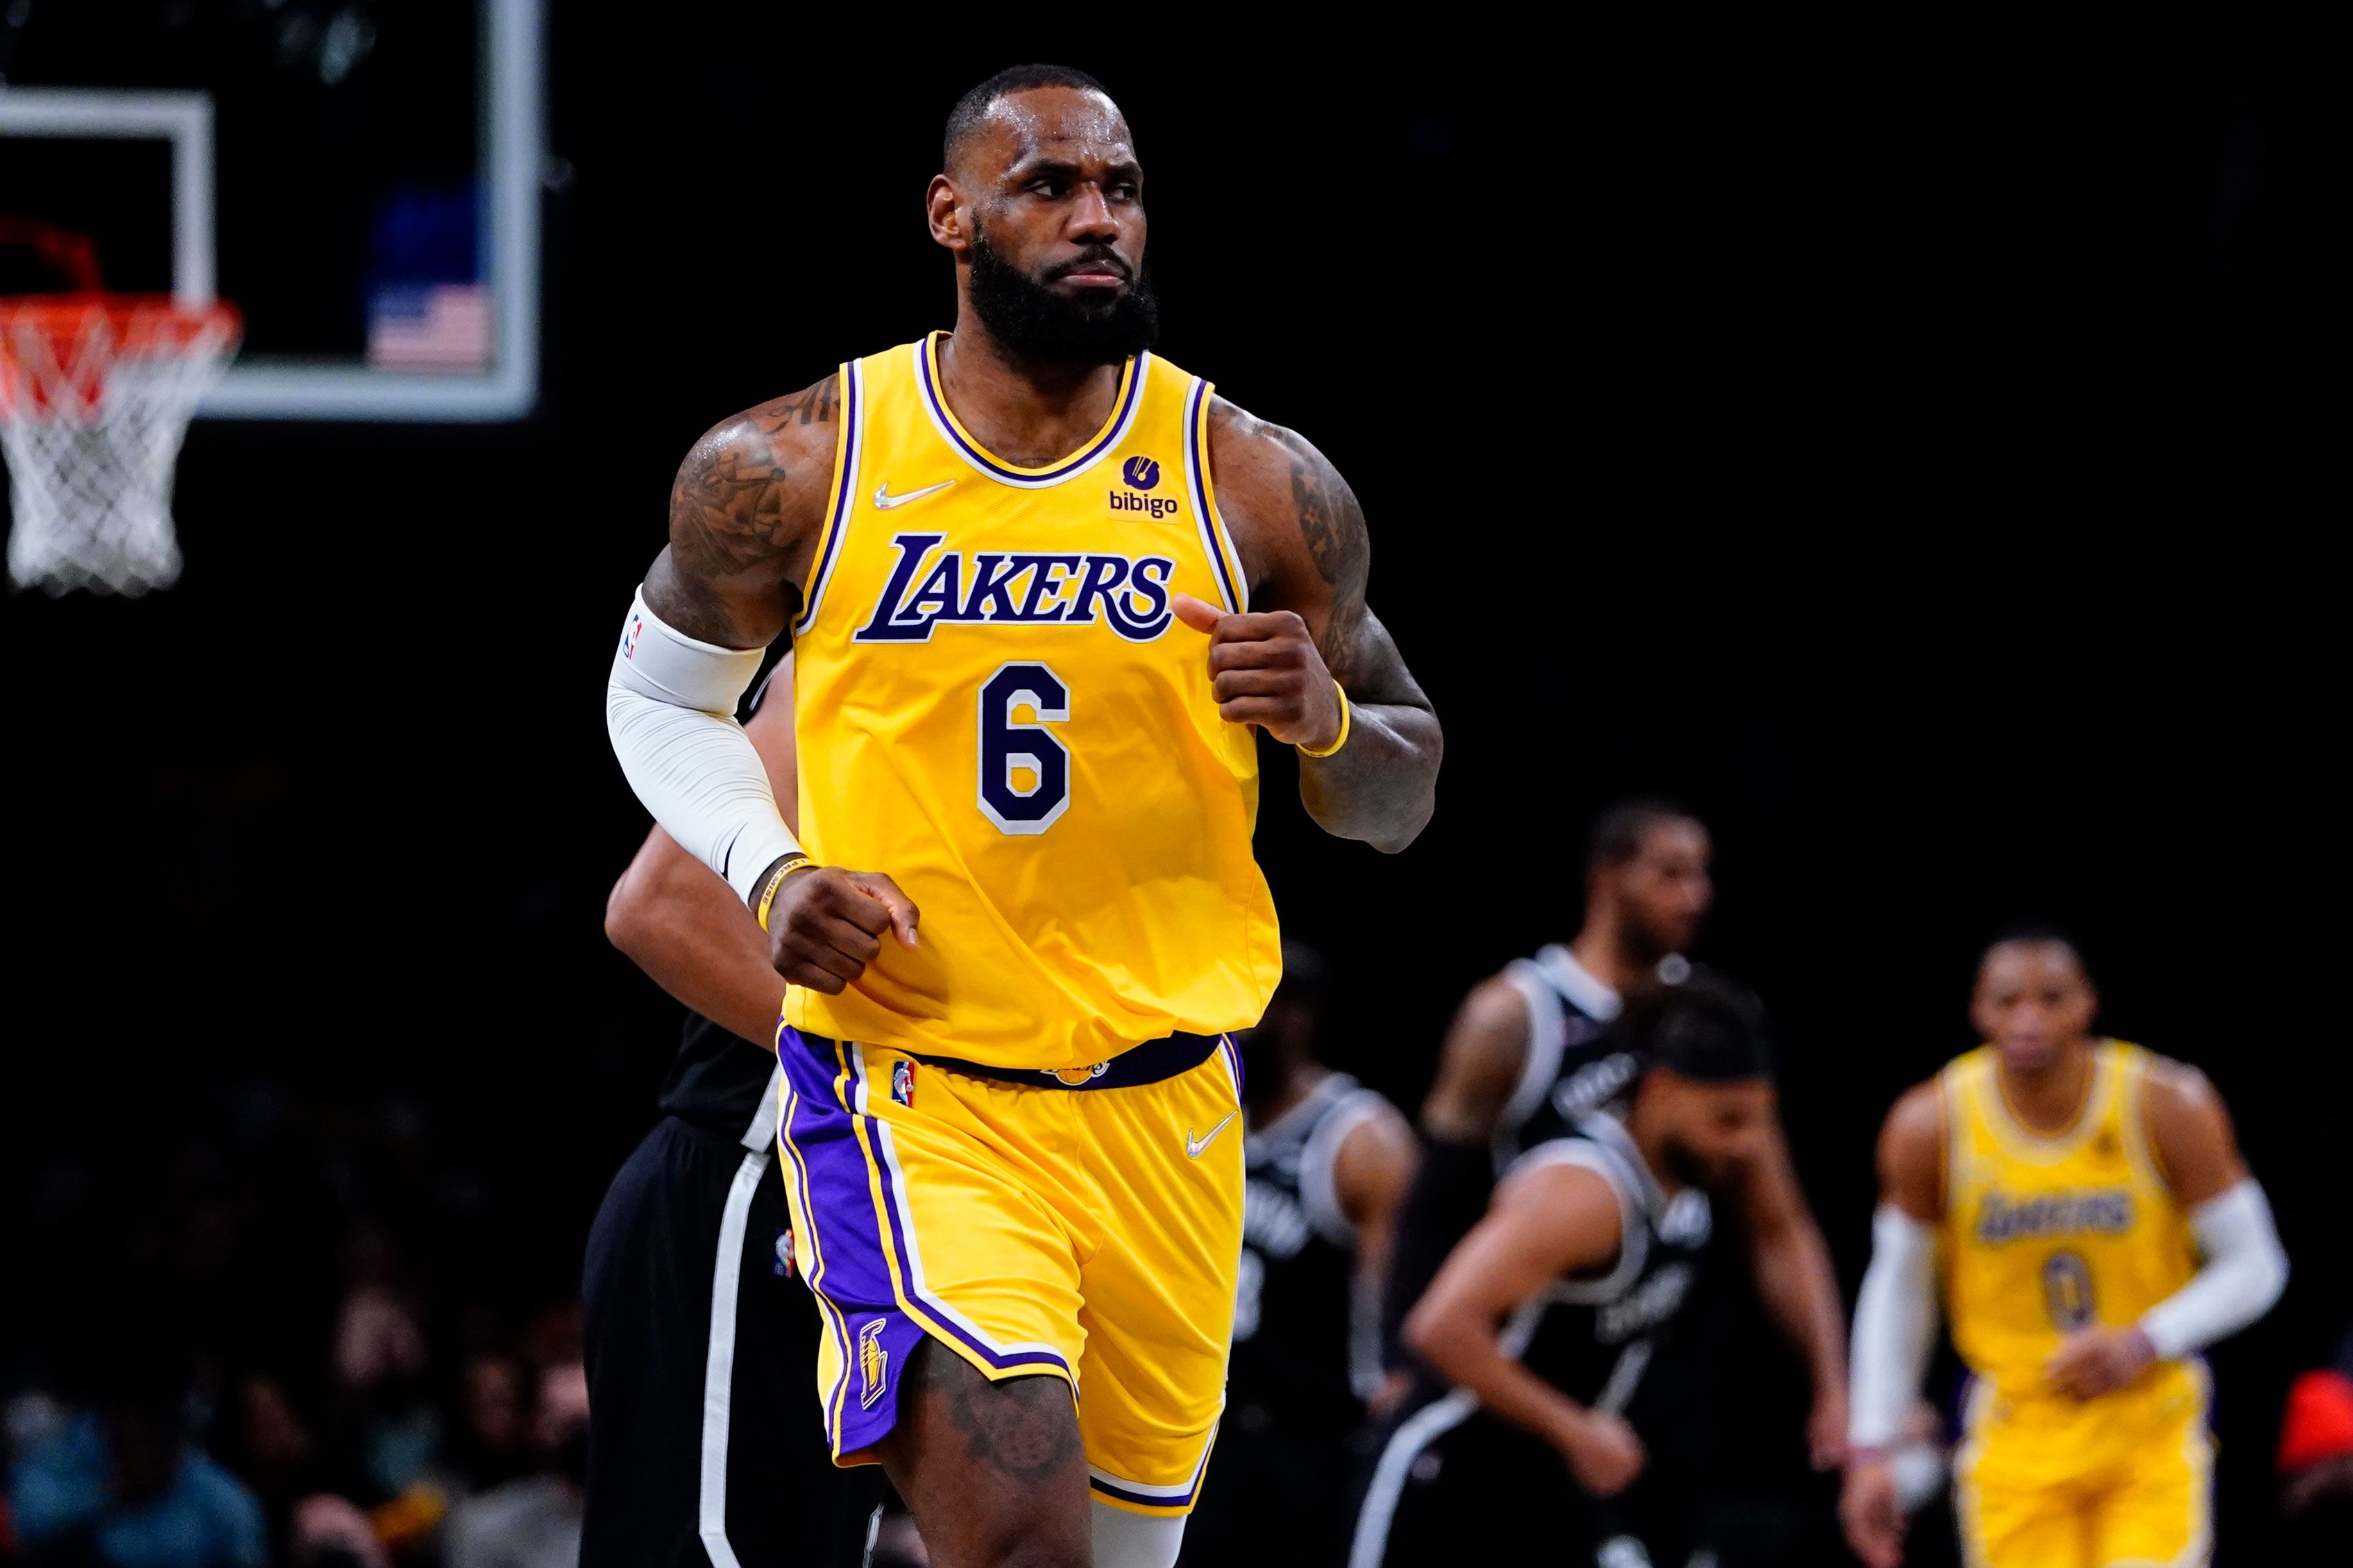 Lakers' LeBron James, Nets' Kevin Durant named NBA All-Star captains, NBA